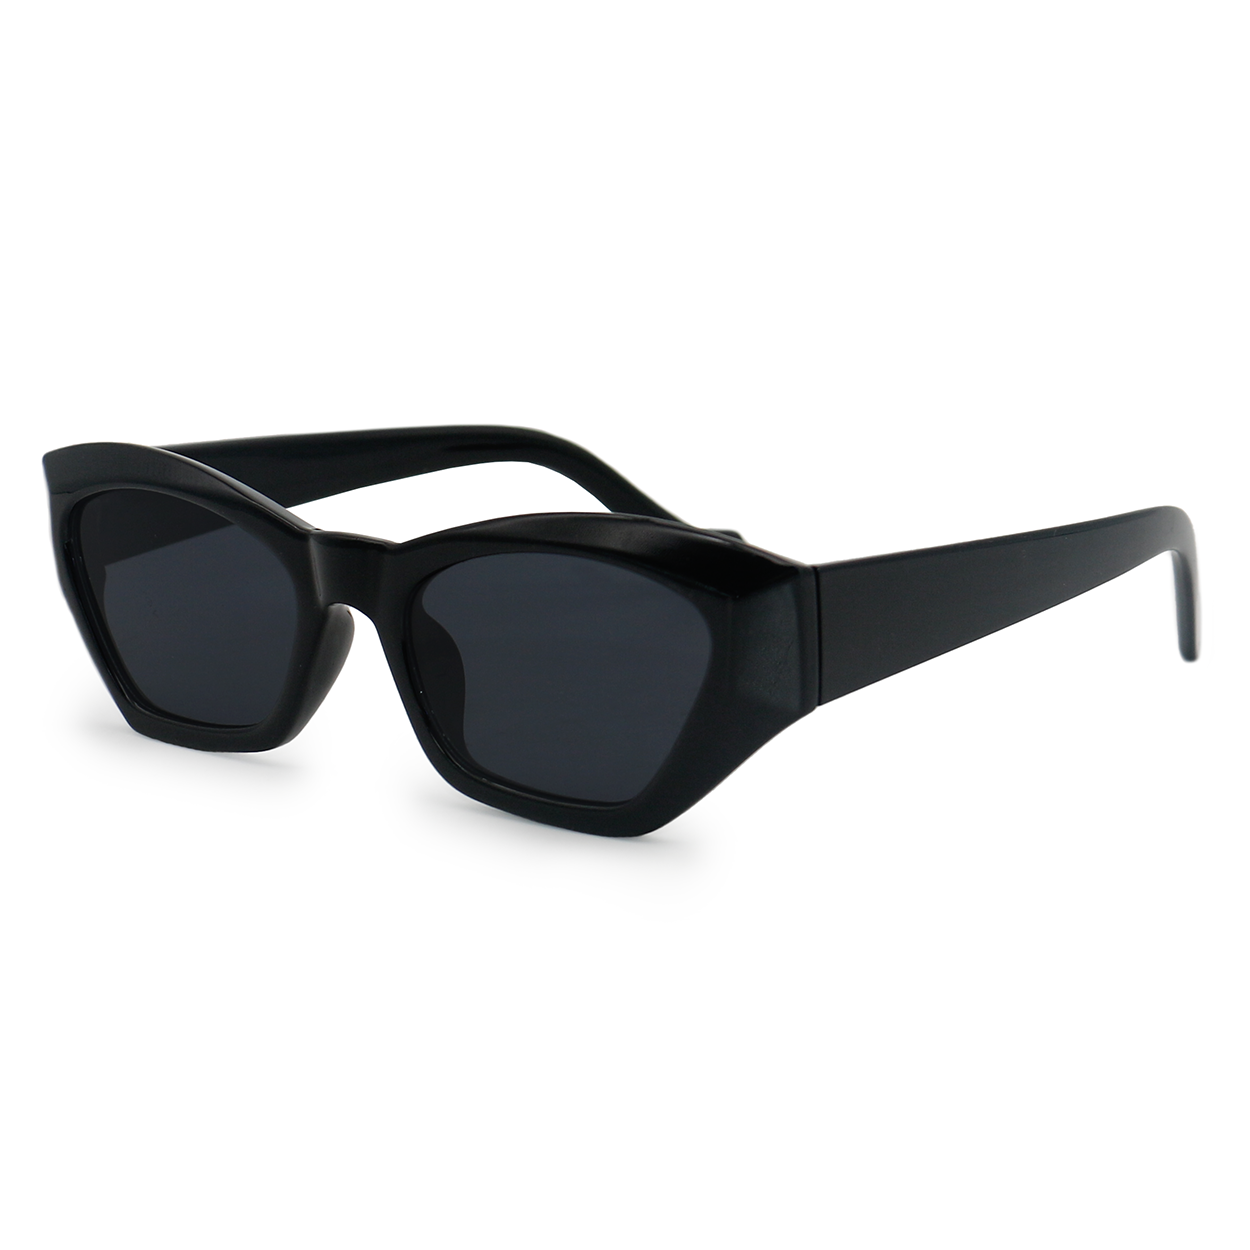 TopFoxx - Bright as my Future - Black Rectangle Cat Eye Sunglasses for Women - Side Profile